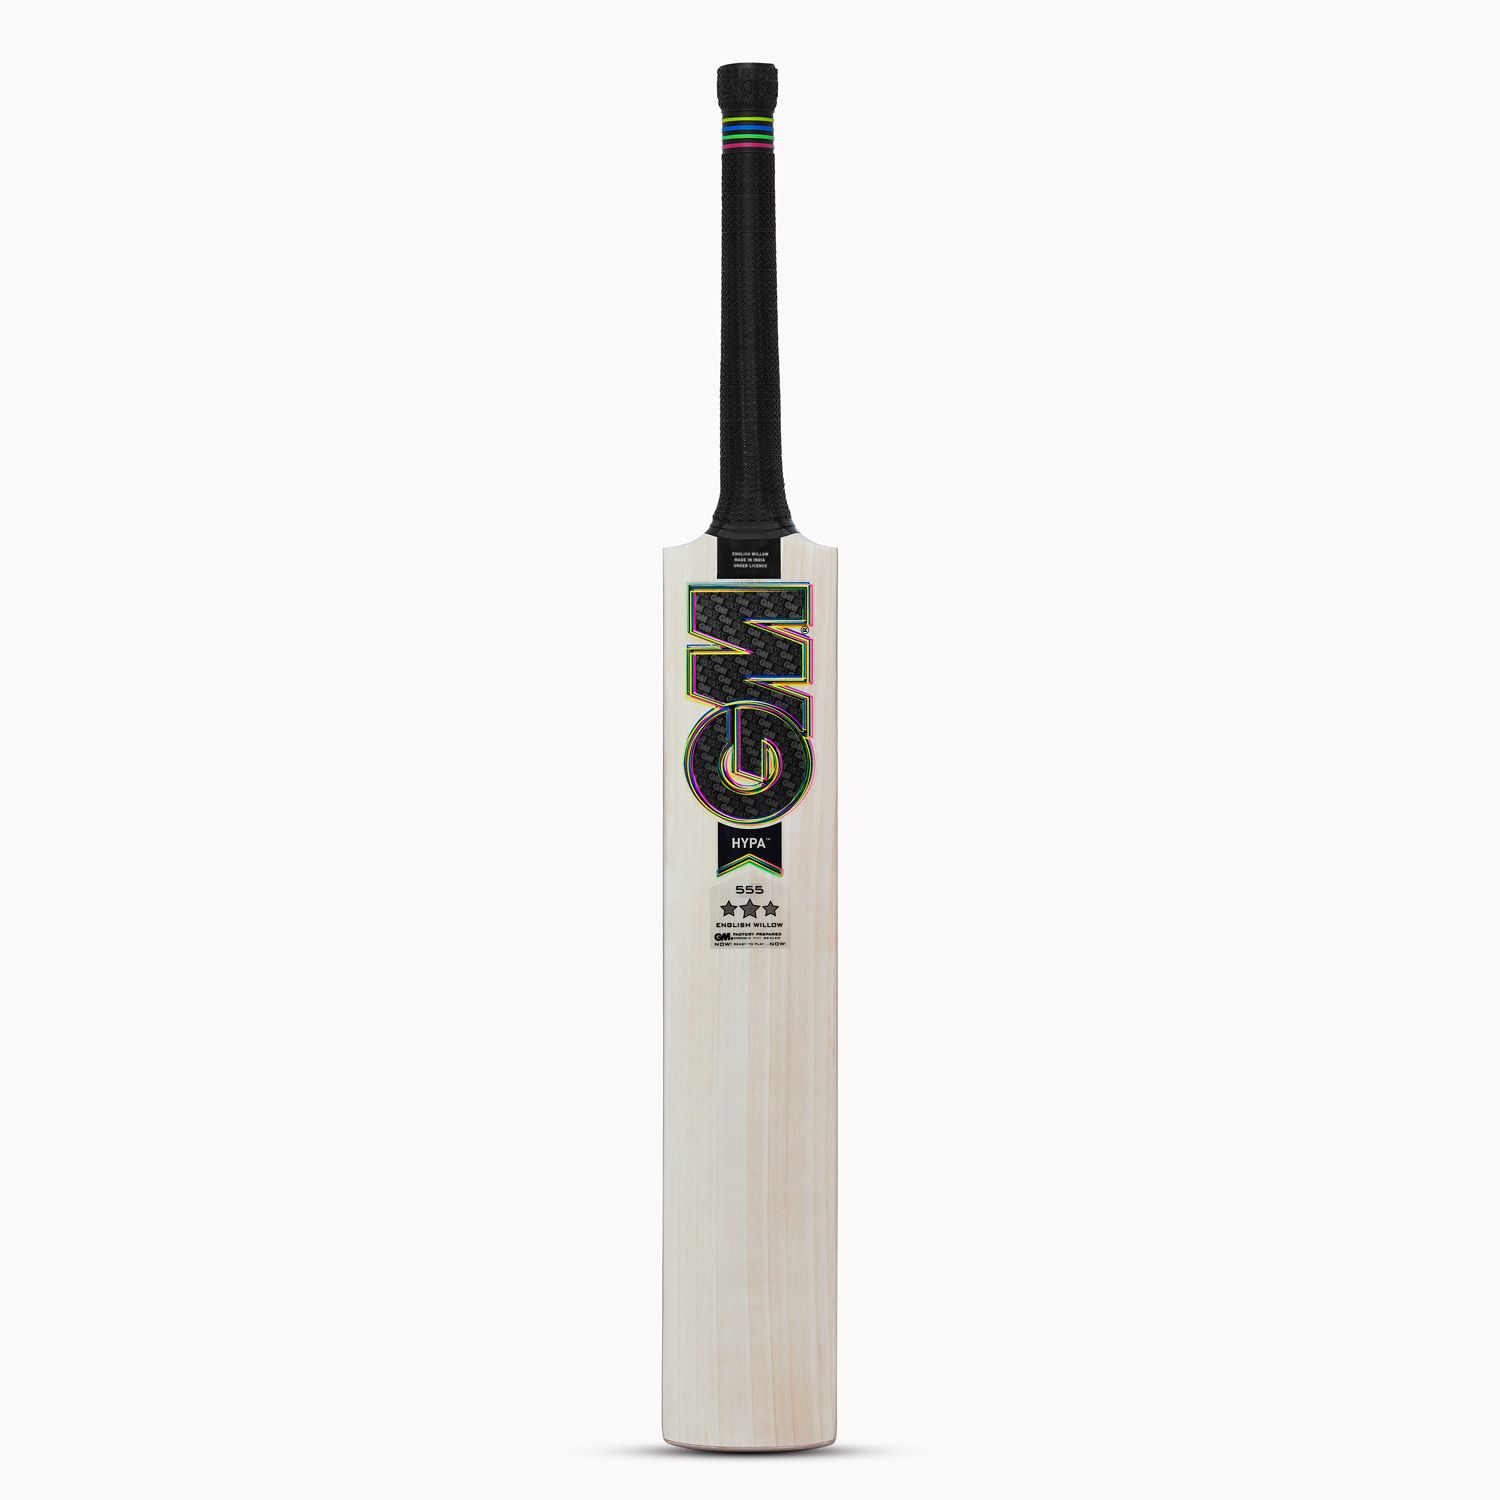 Hypa 555 English Willow Cricket Bat